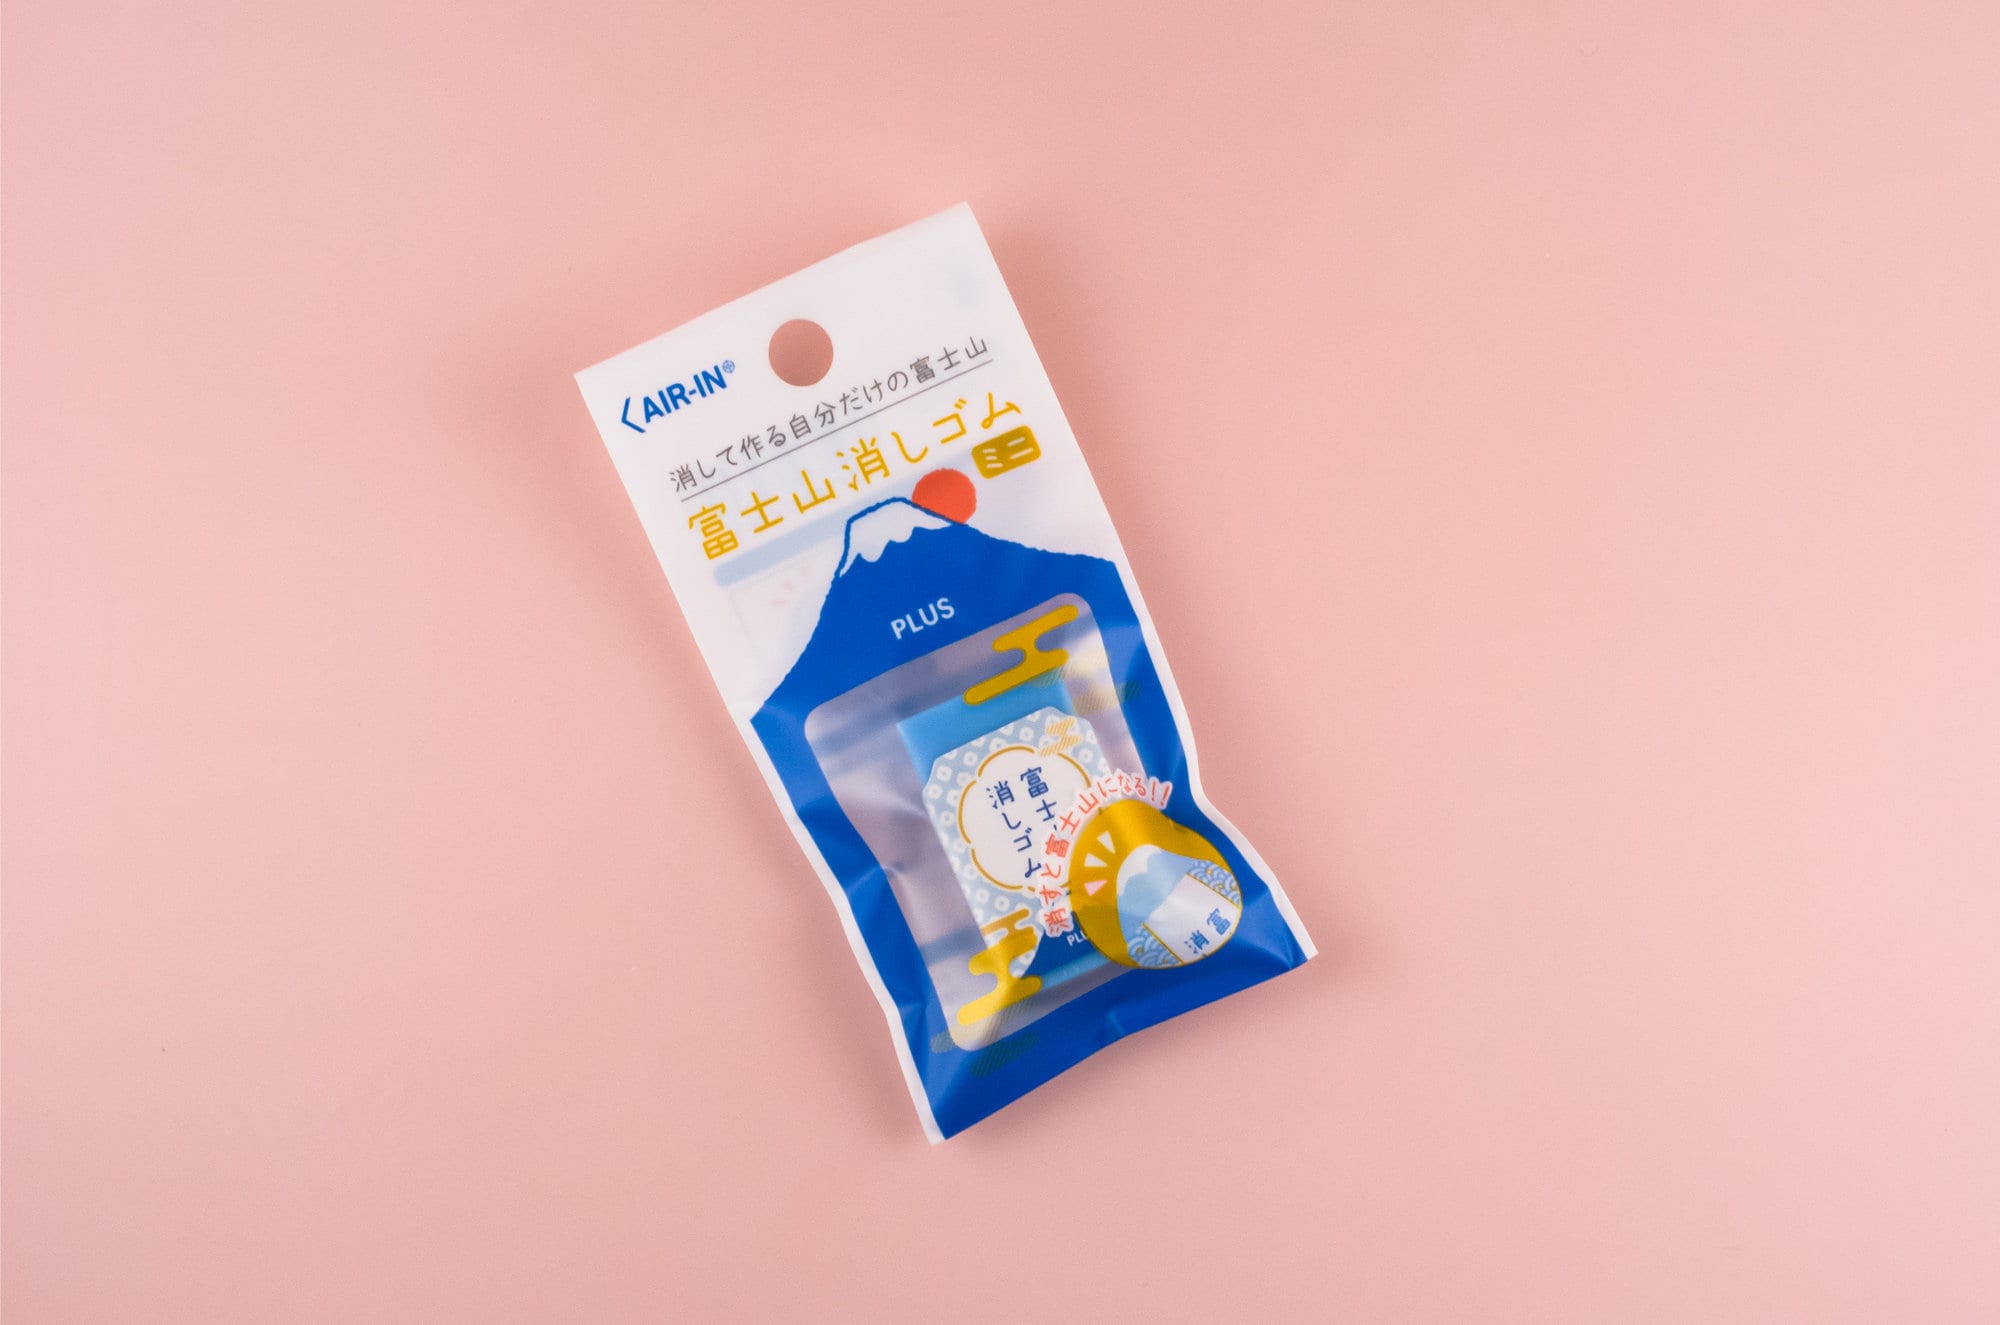 Iwako Erasers - Mount Fuji & Maiko Set » Fast and Cheap Shipping